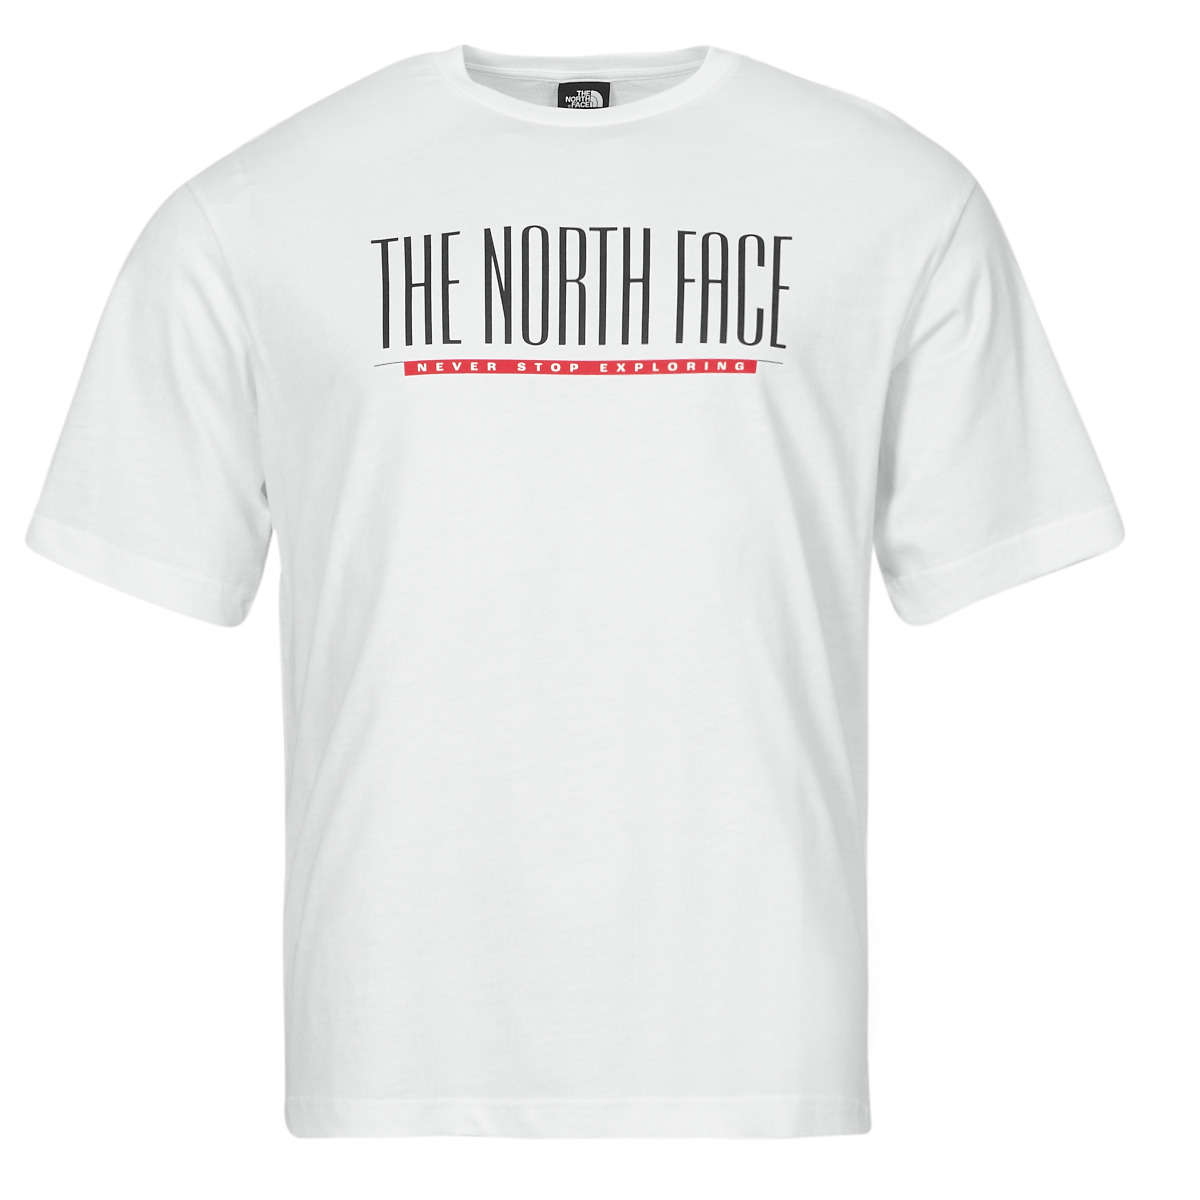 The North Face Blanc TNF EST 1966 TDClMXxu